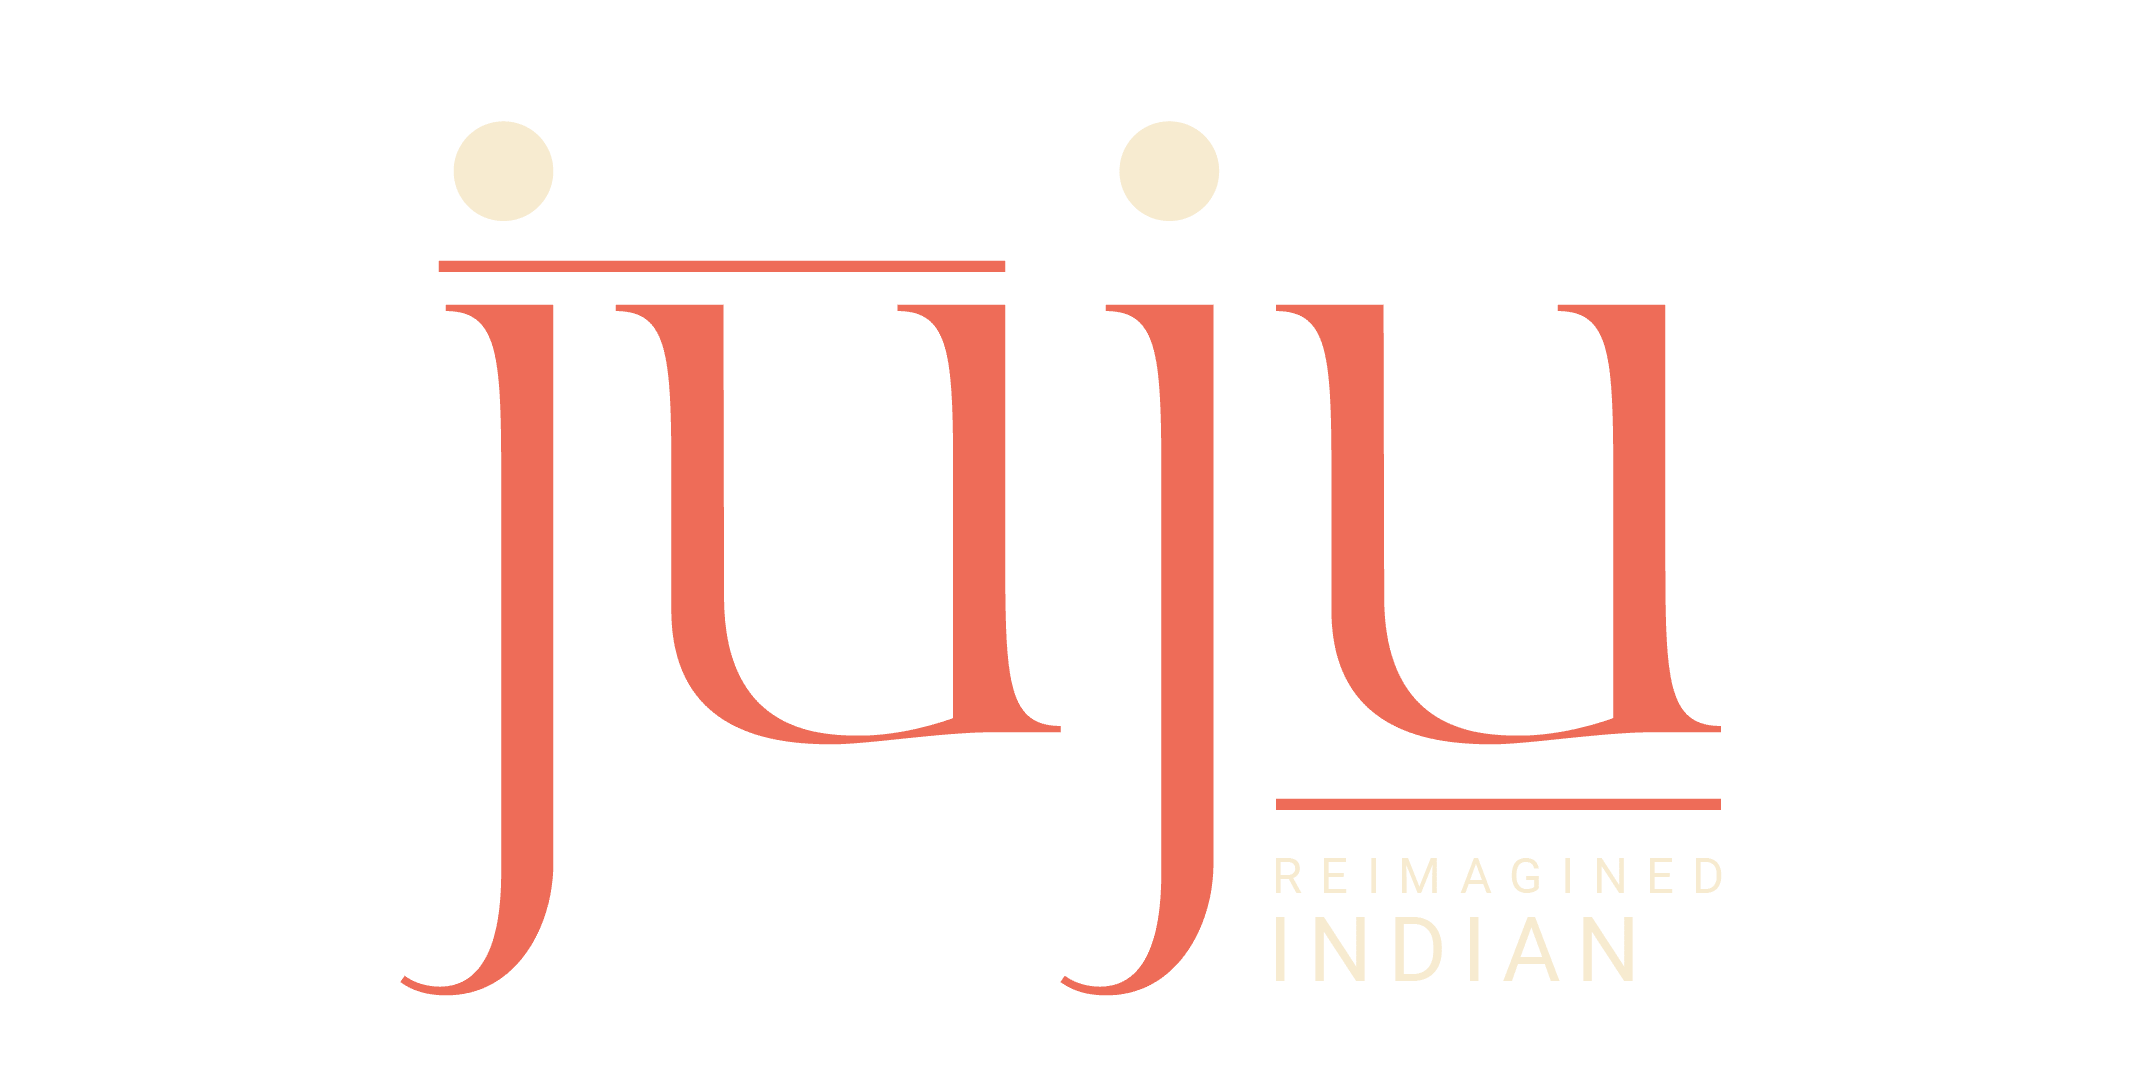 Juju Restaurant Logo